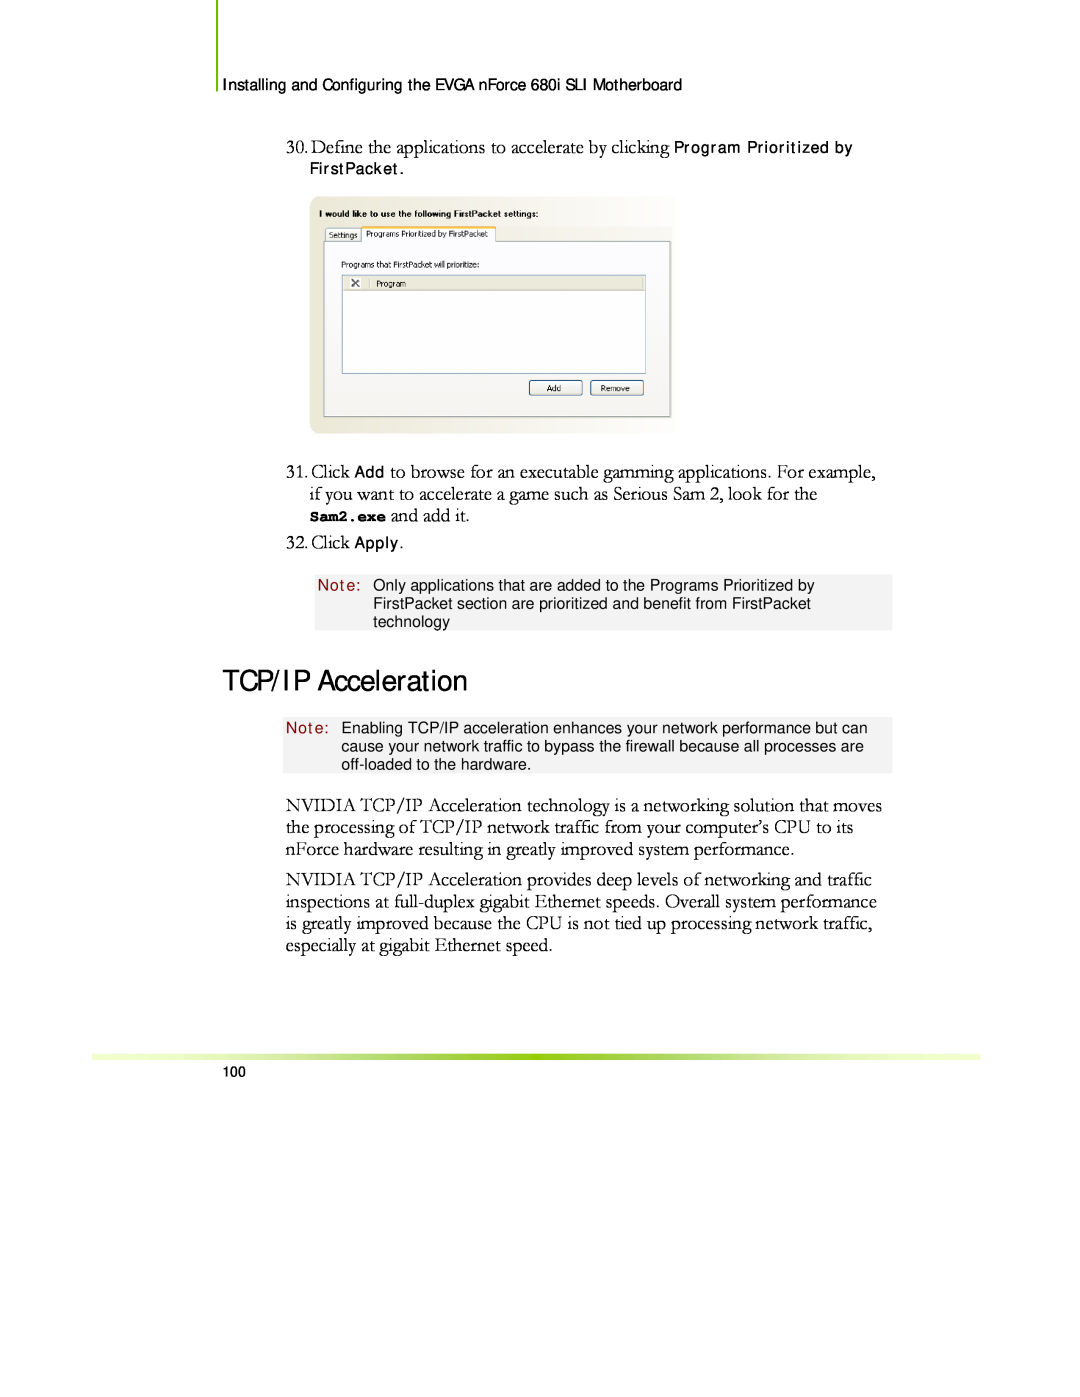 EVGA 122-CK-NF68-XX manual TCP/IP Acceleration 